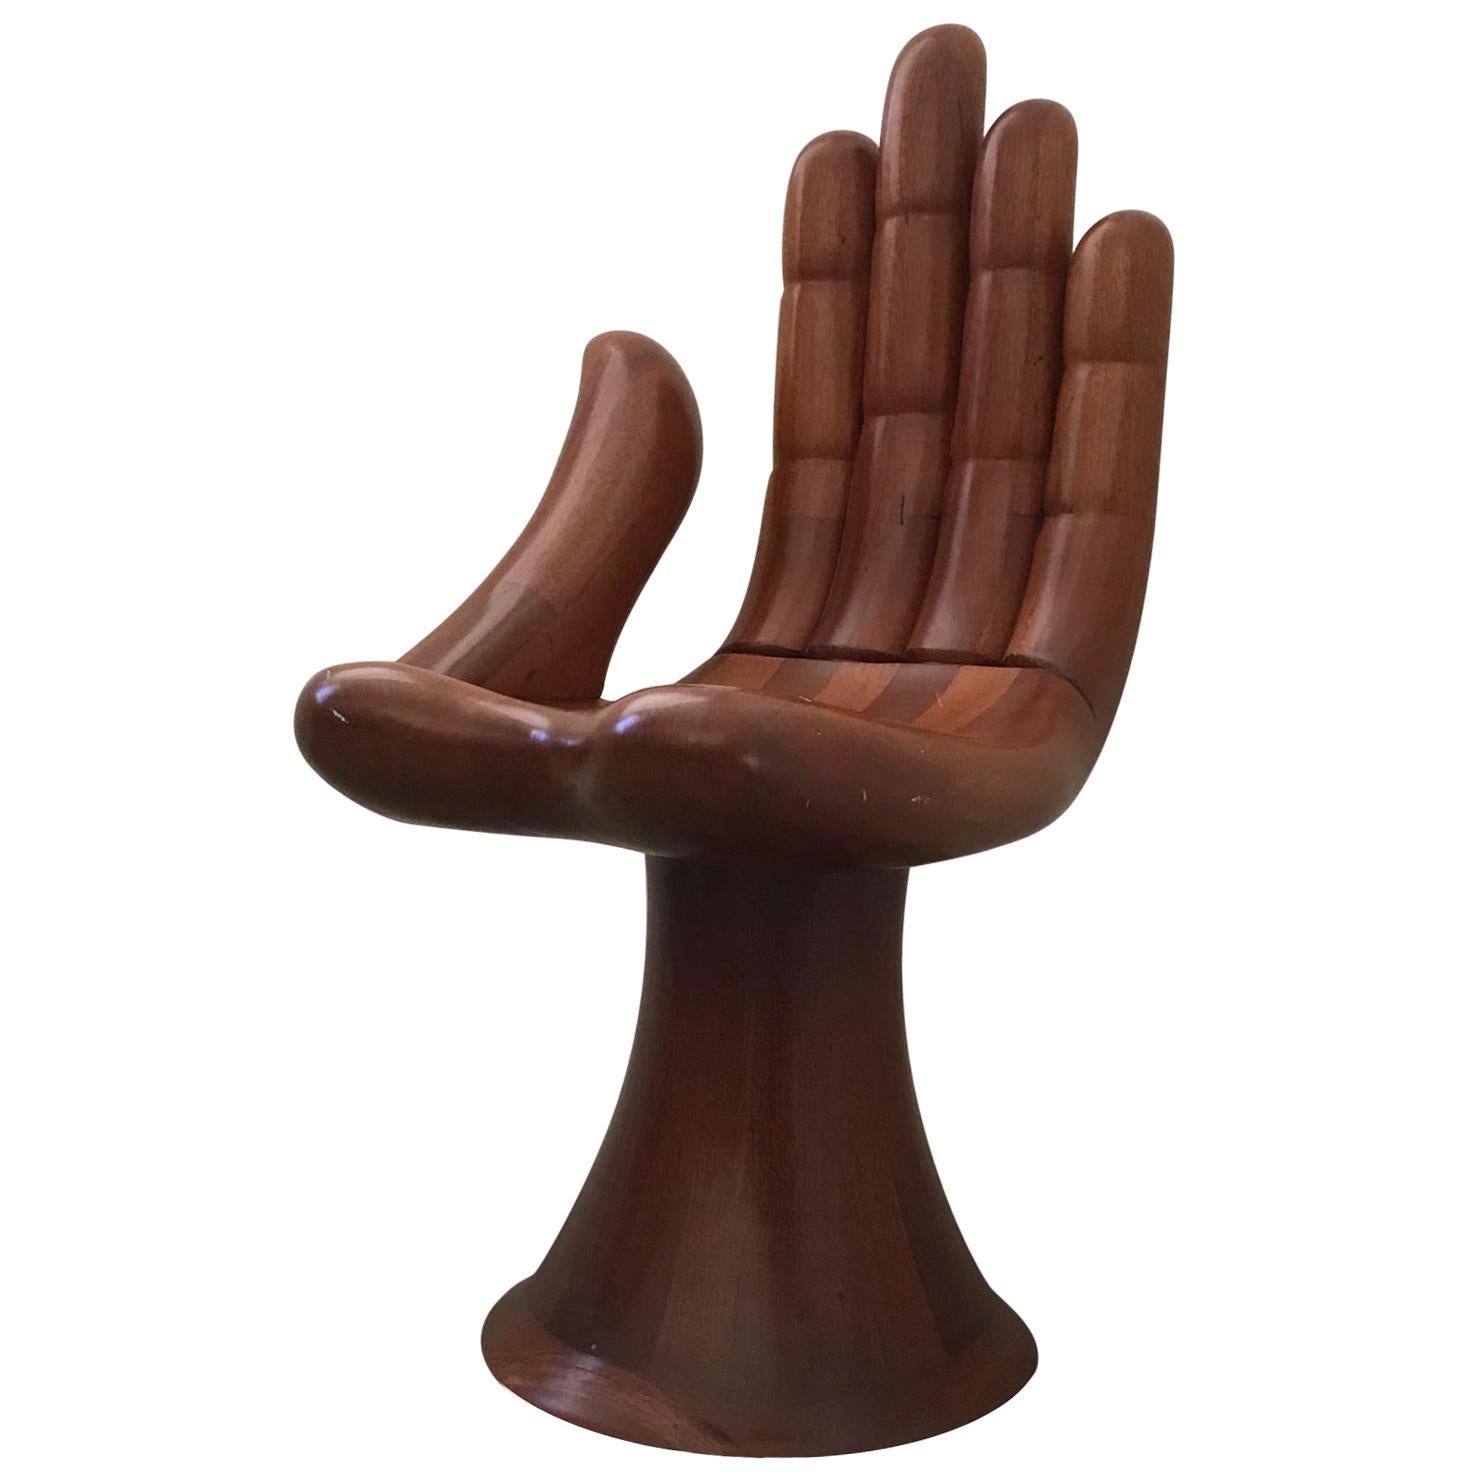 Pedro Friedeberg Mahogany Wood Hand Chair Surrealist Mid-century Modern